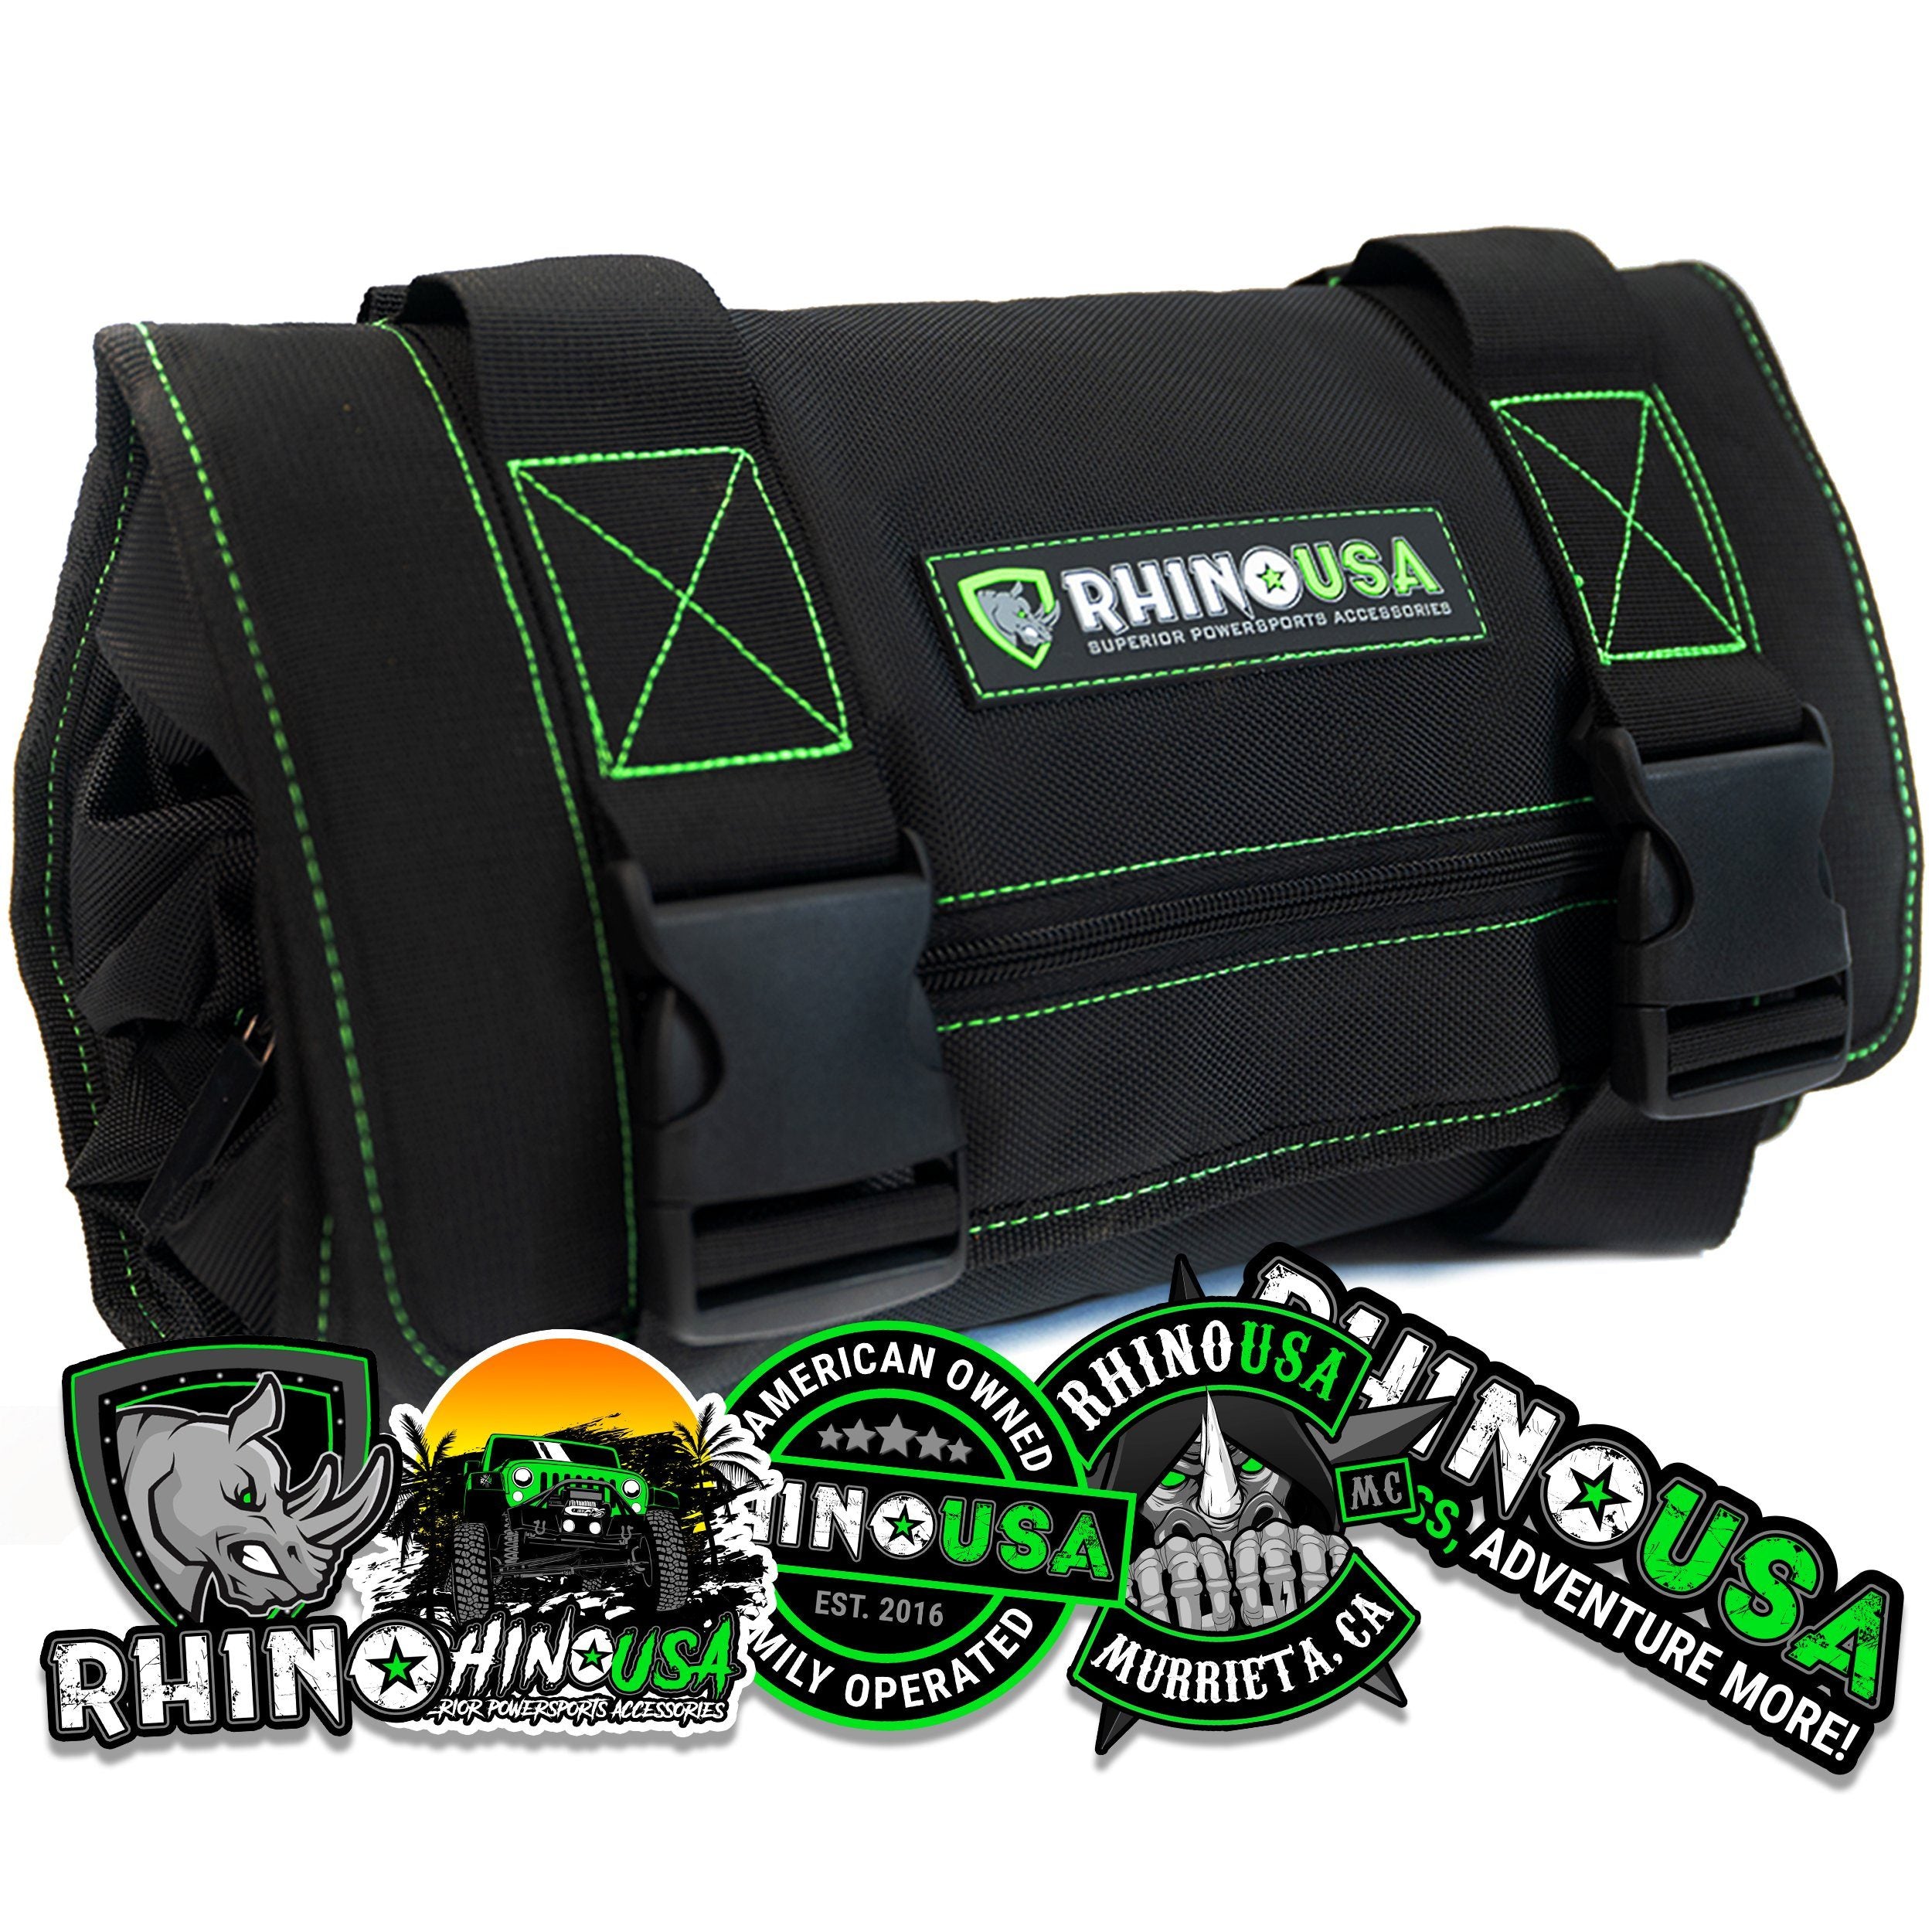 🎉 The WINNER of the $200 RHINO USA PowerBox Contest is - Rhino USA